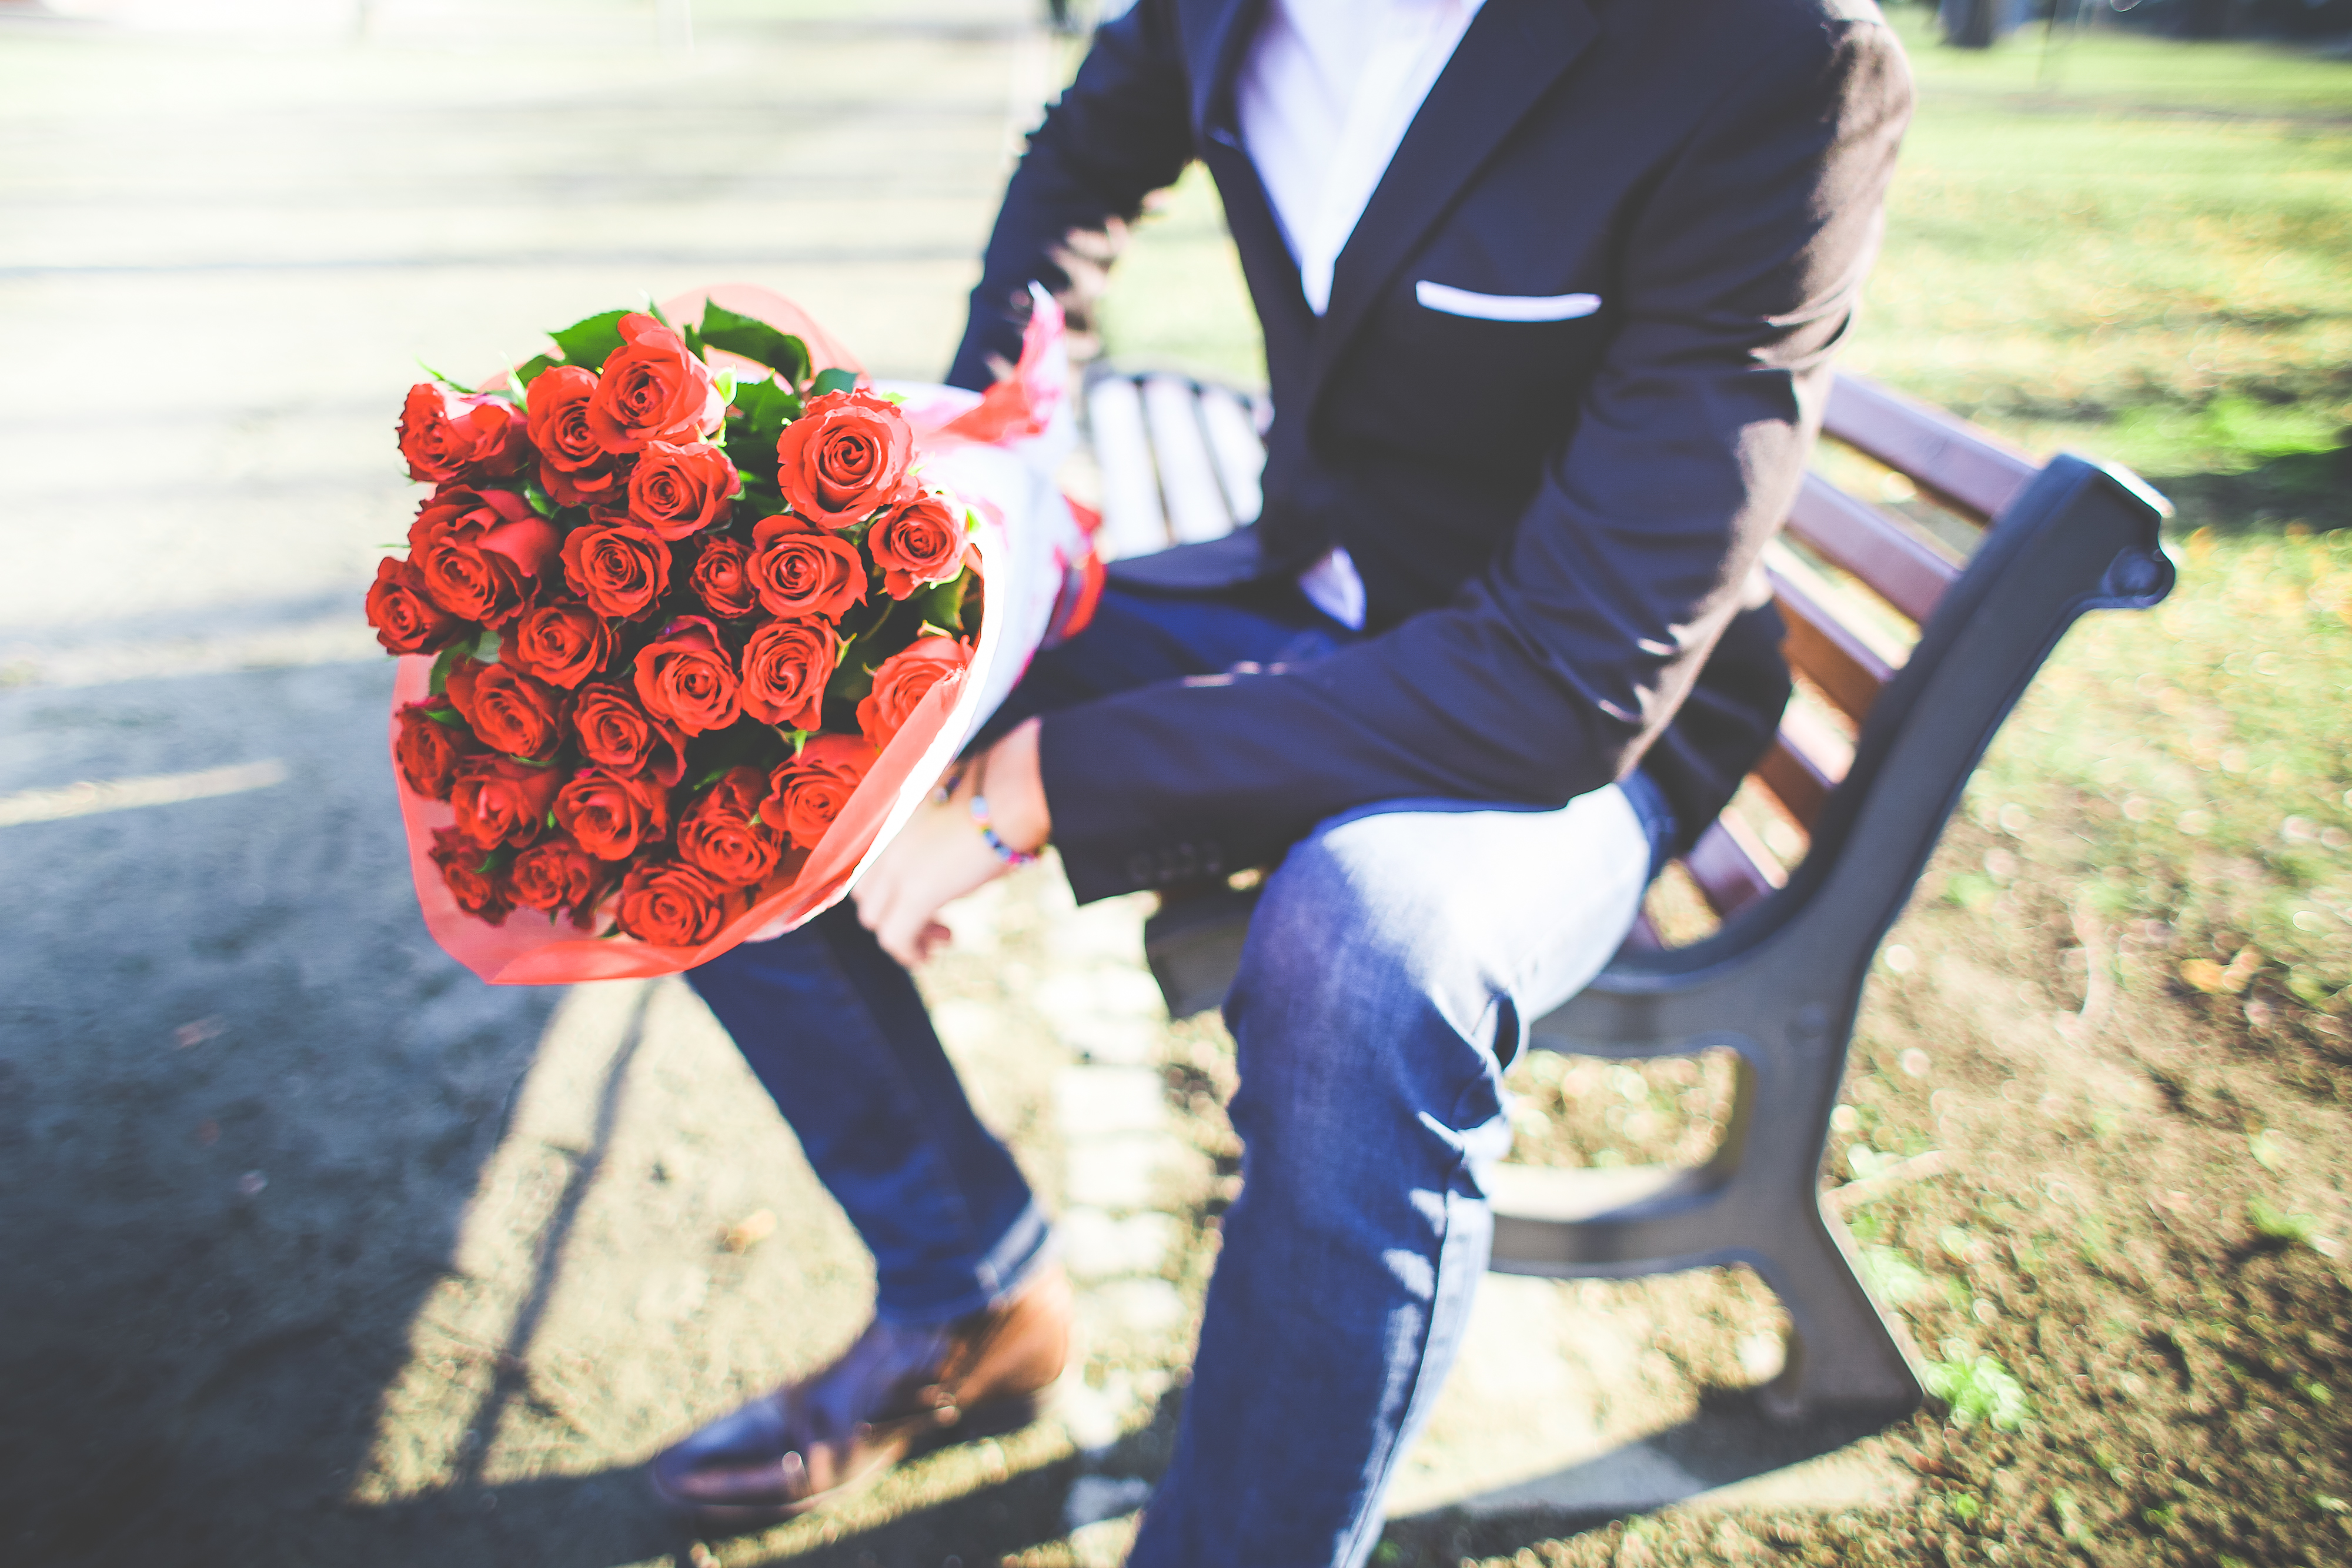 Букет цветов для мужчины